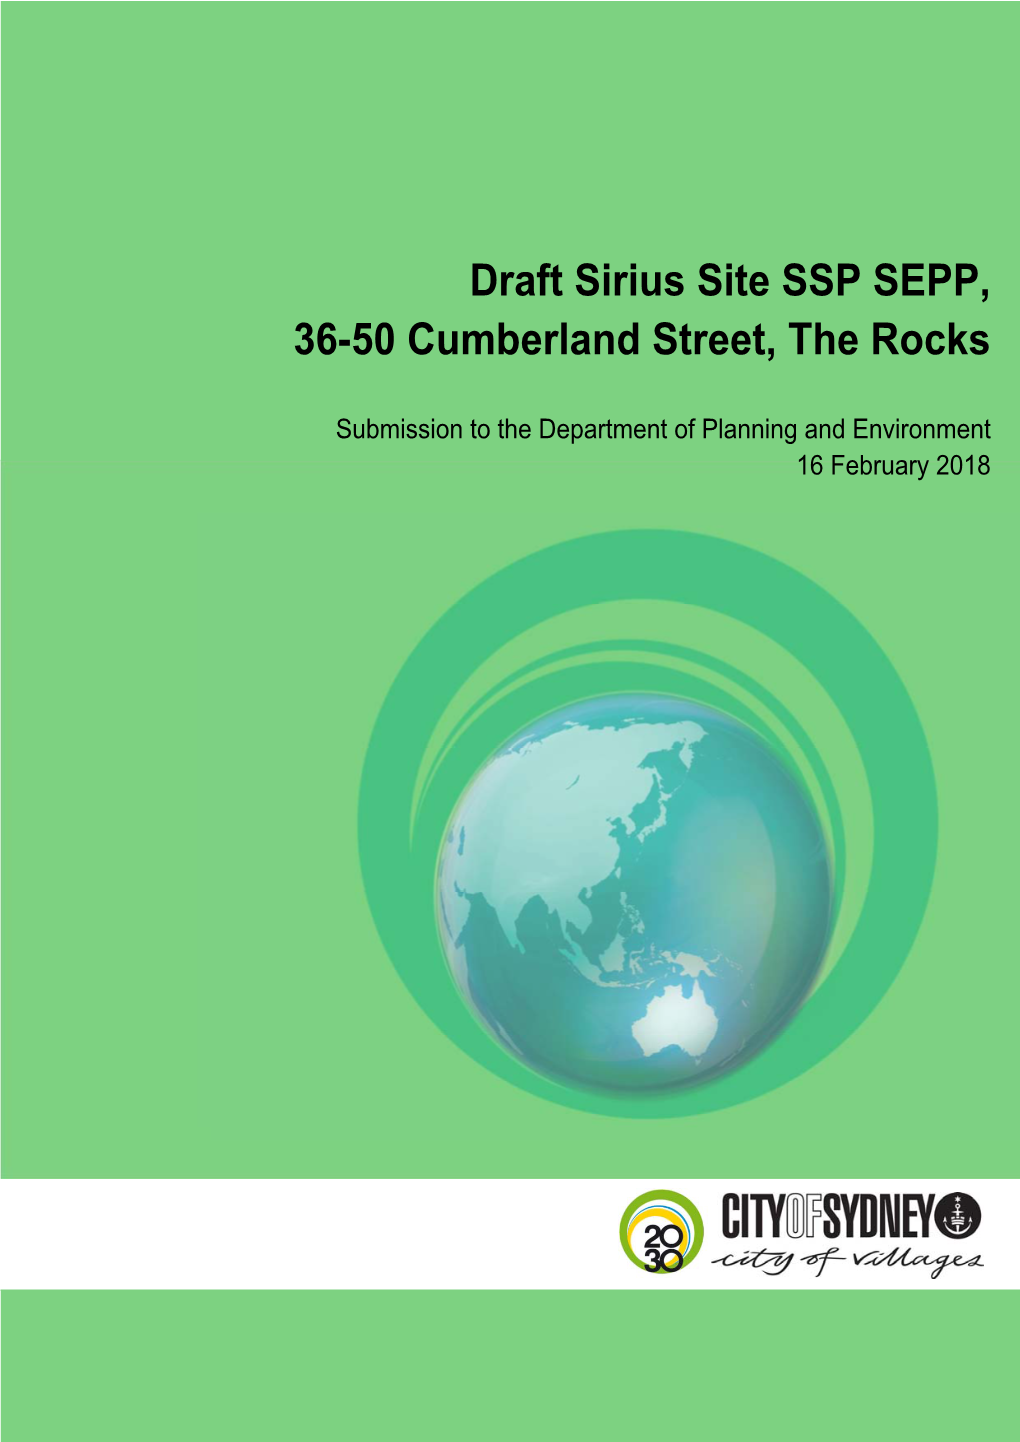 Draft Sirius Site SSP SEPP, 36-50 Cumberland Street, the Rocks